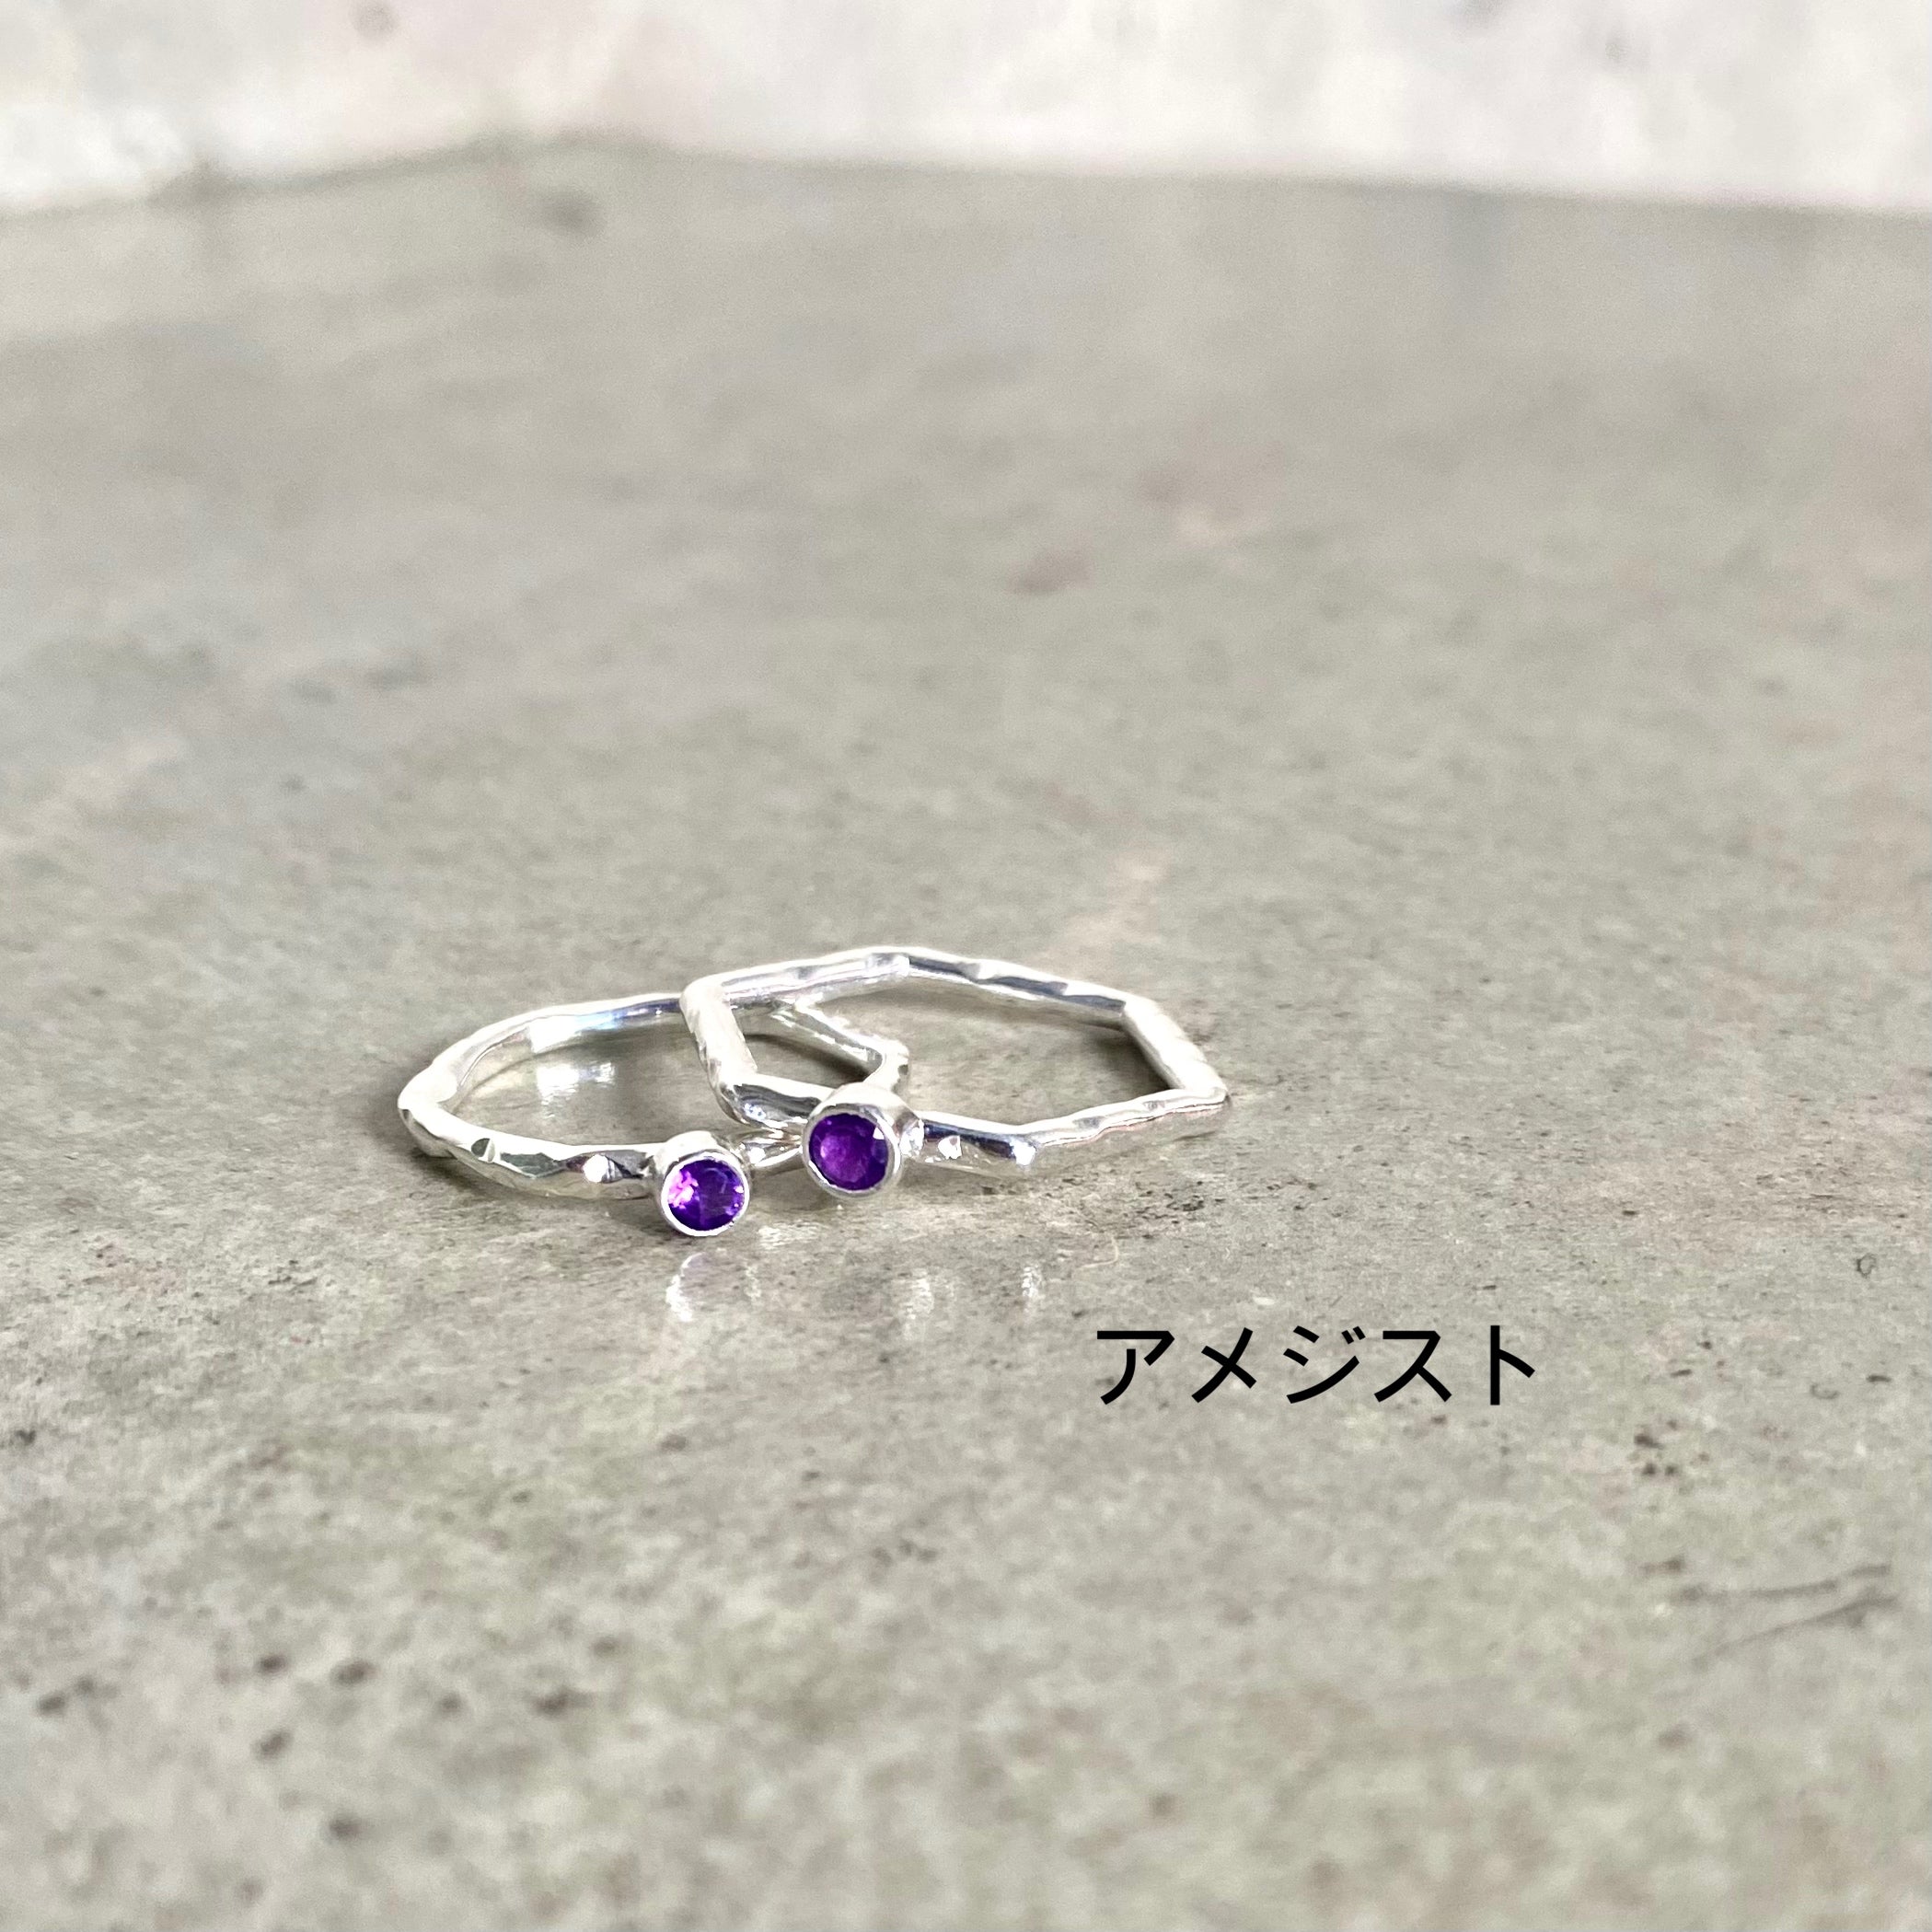 Silver925 petit ring 〈Hexagon〉 – Biju mam